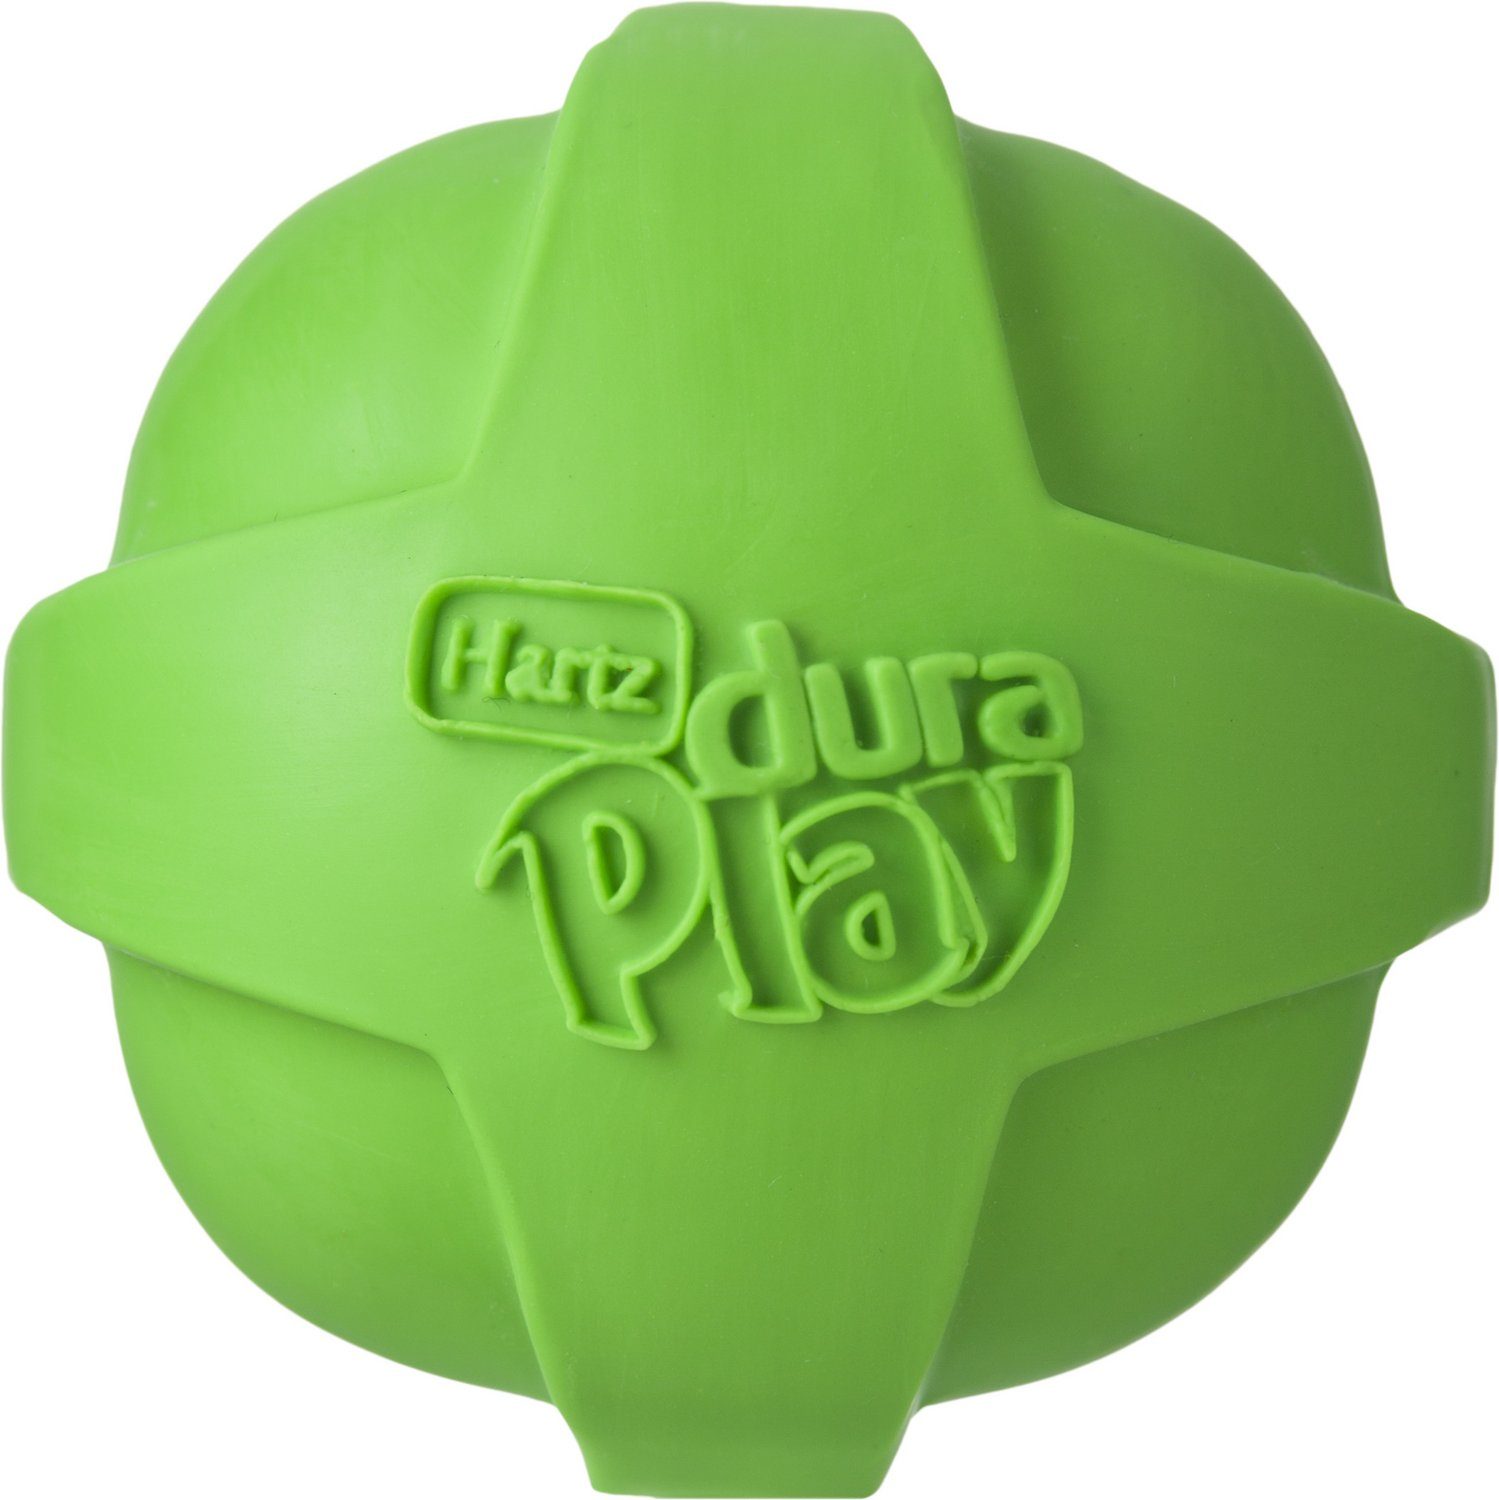 Canine's World Balls Hartz Dura Play Ball Dog Toy, Color Varies Hartz